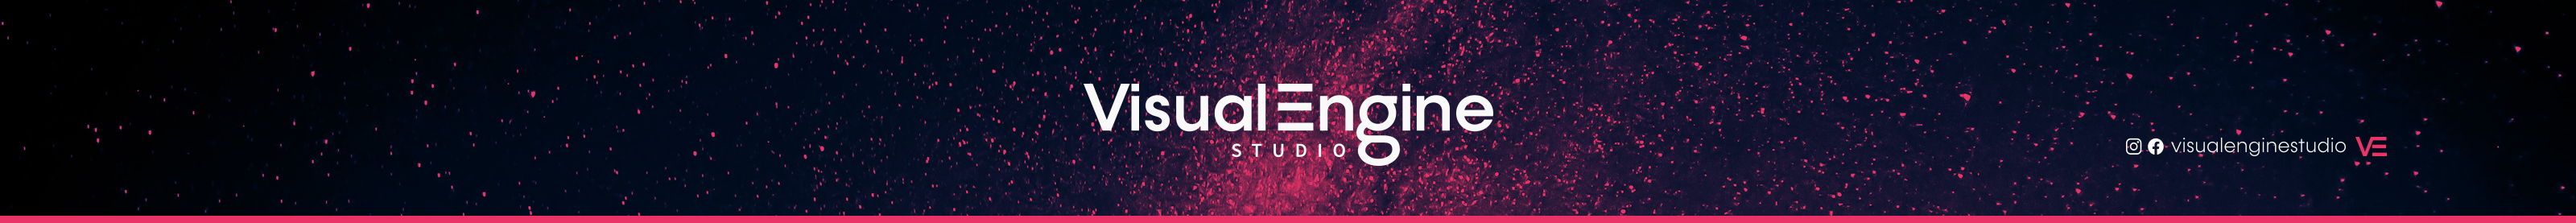 Visual Engine Studio's profile banner